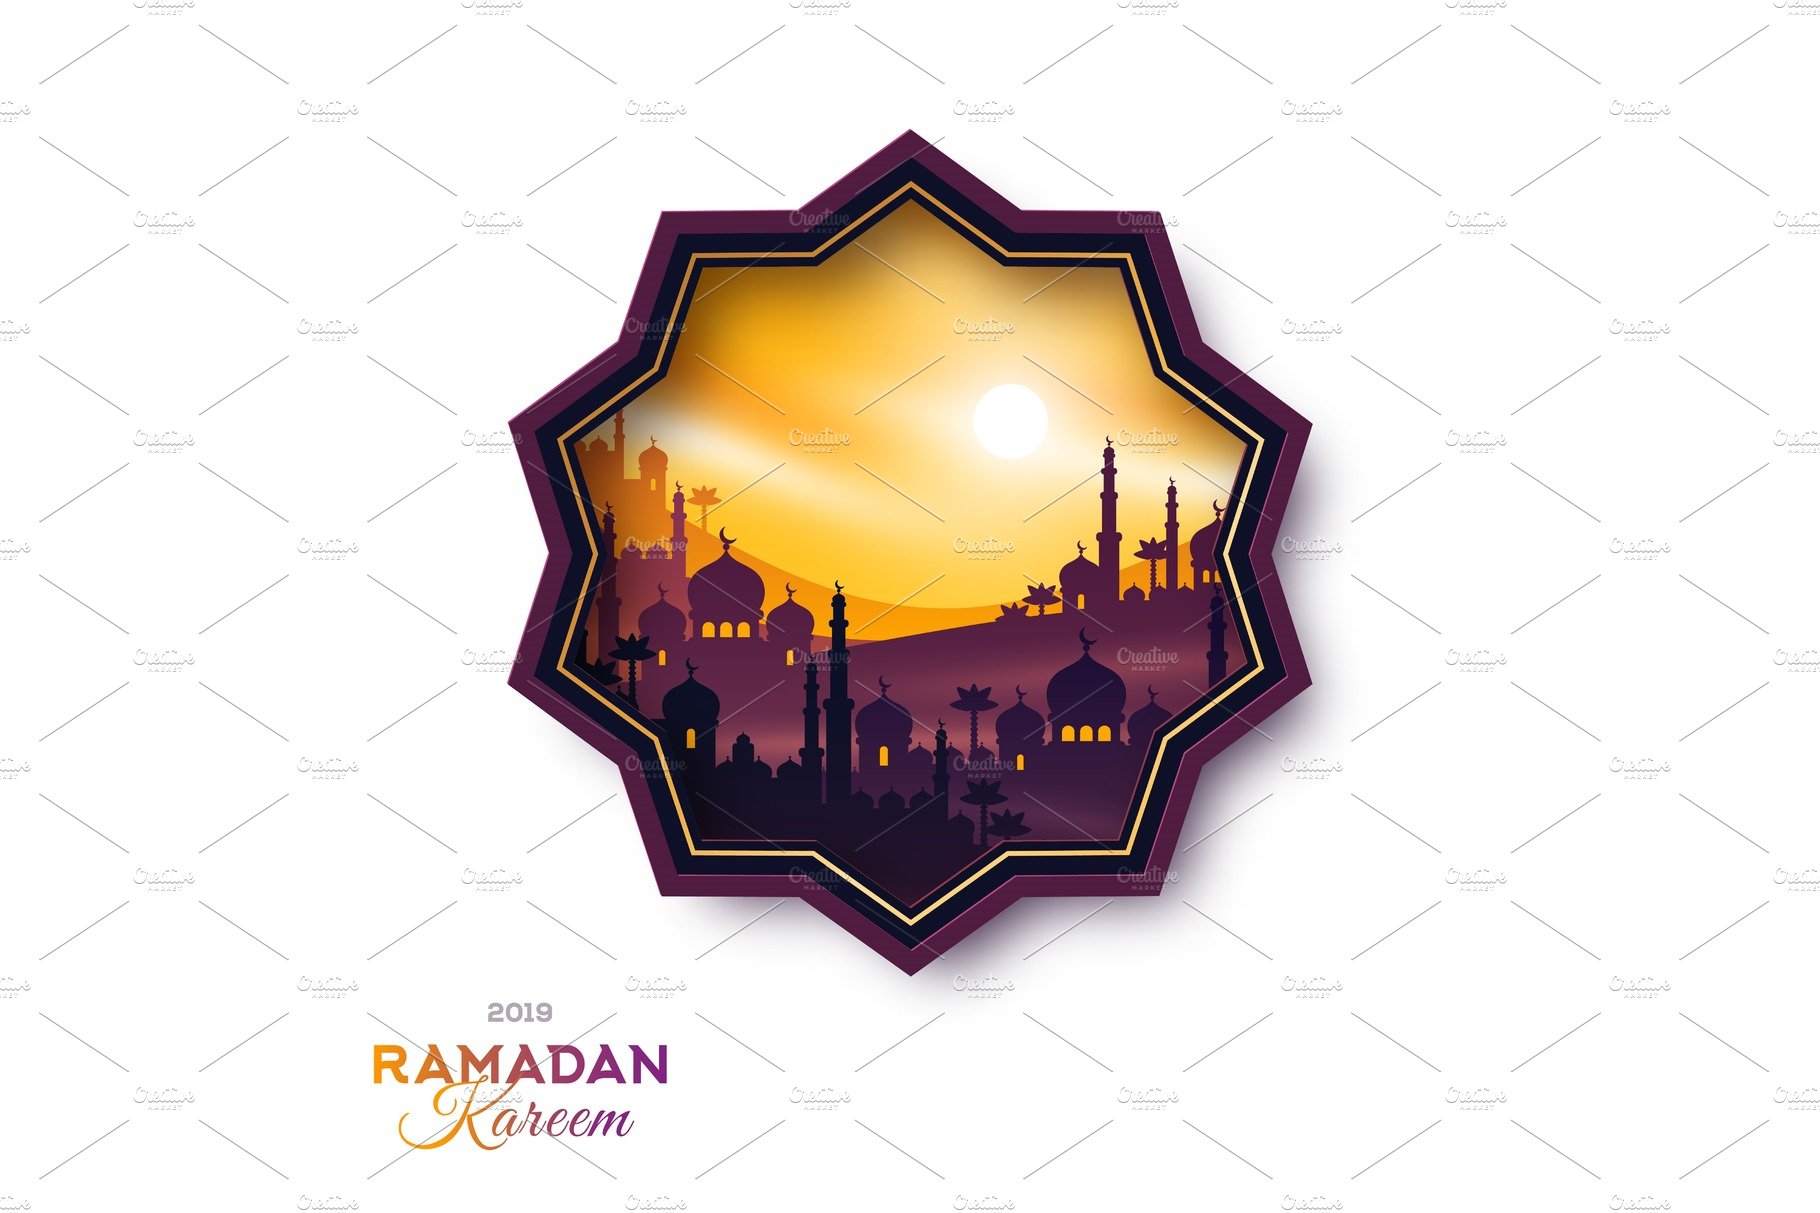 Arabian city at sunset emblem cover image.